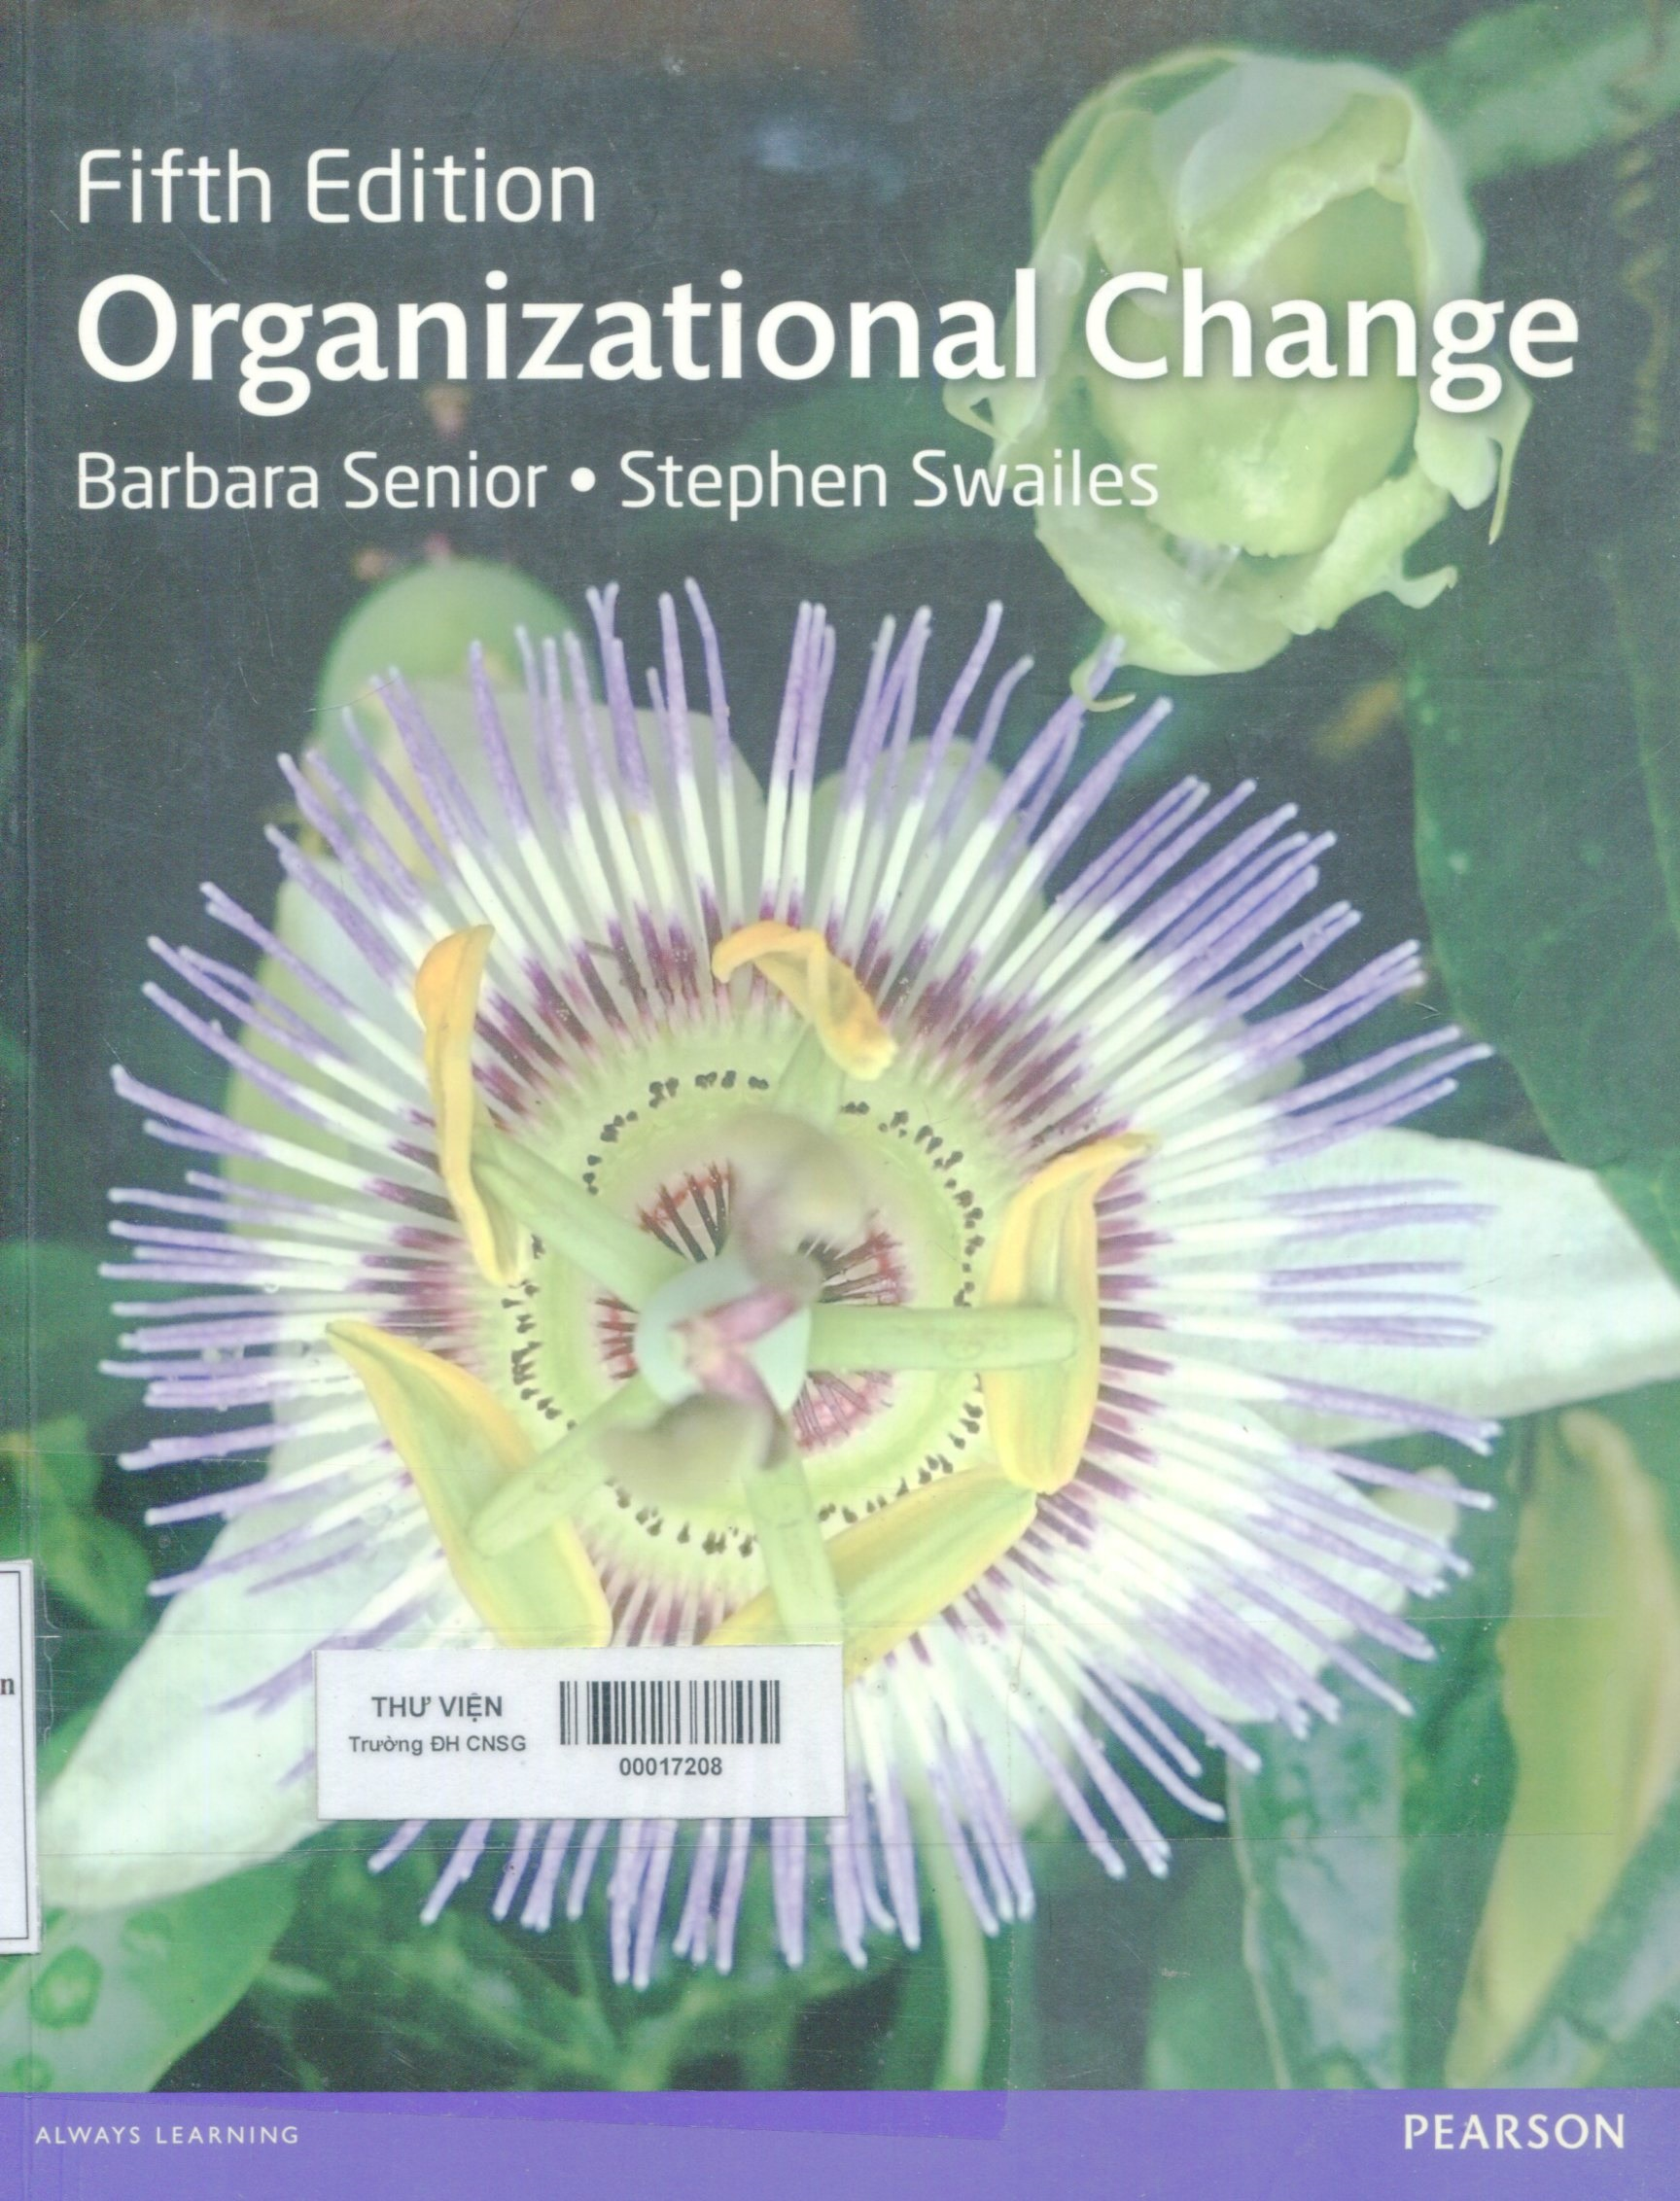 Organizational change